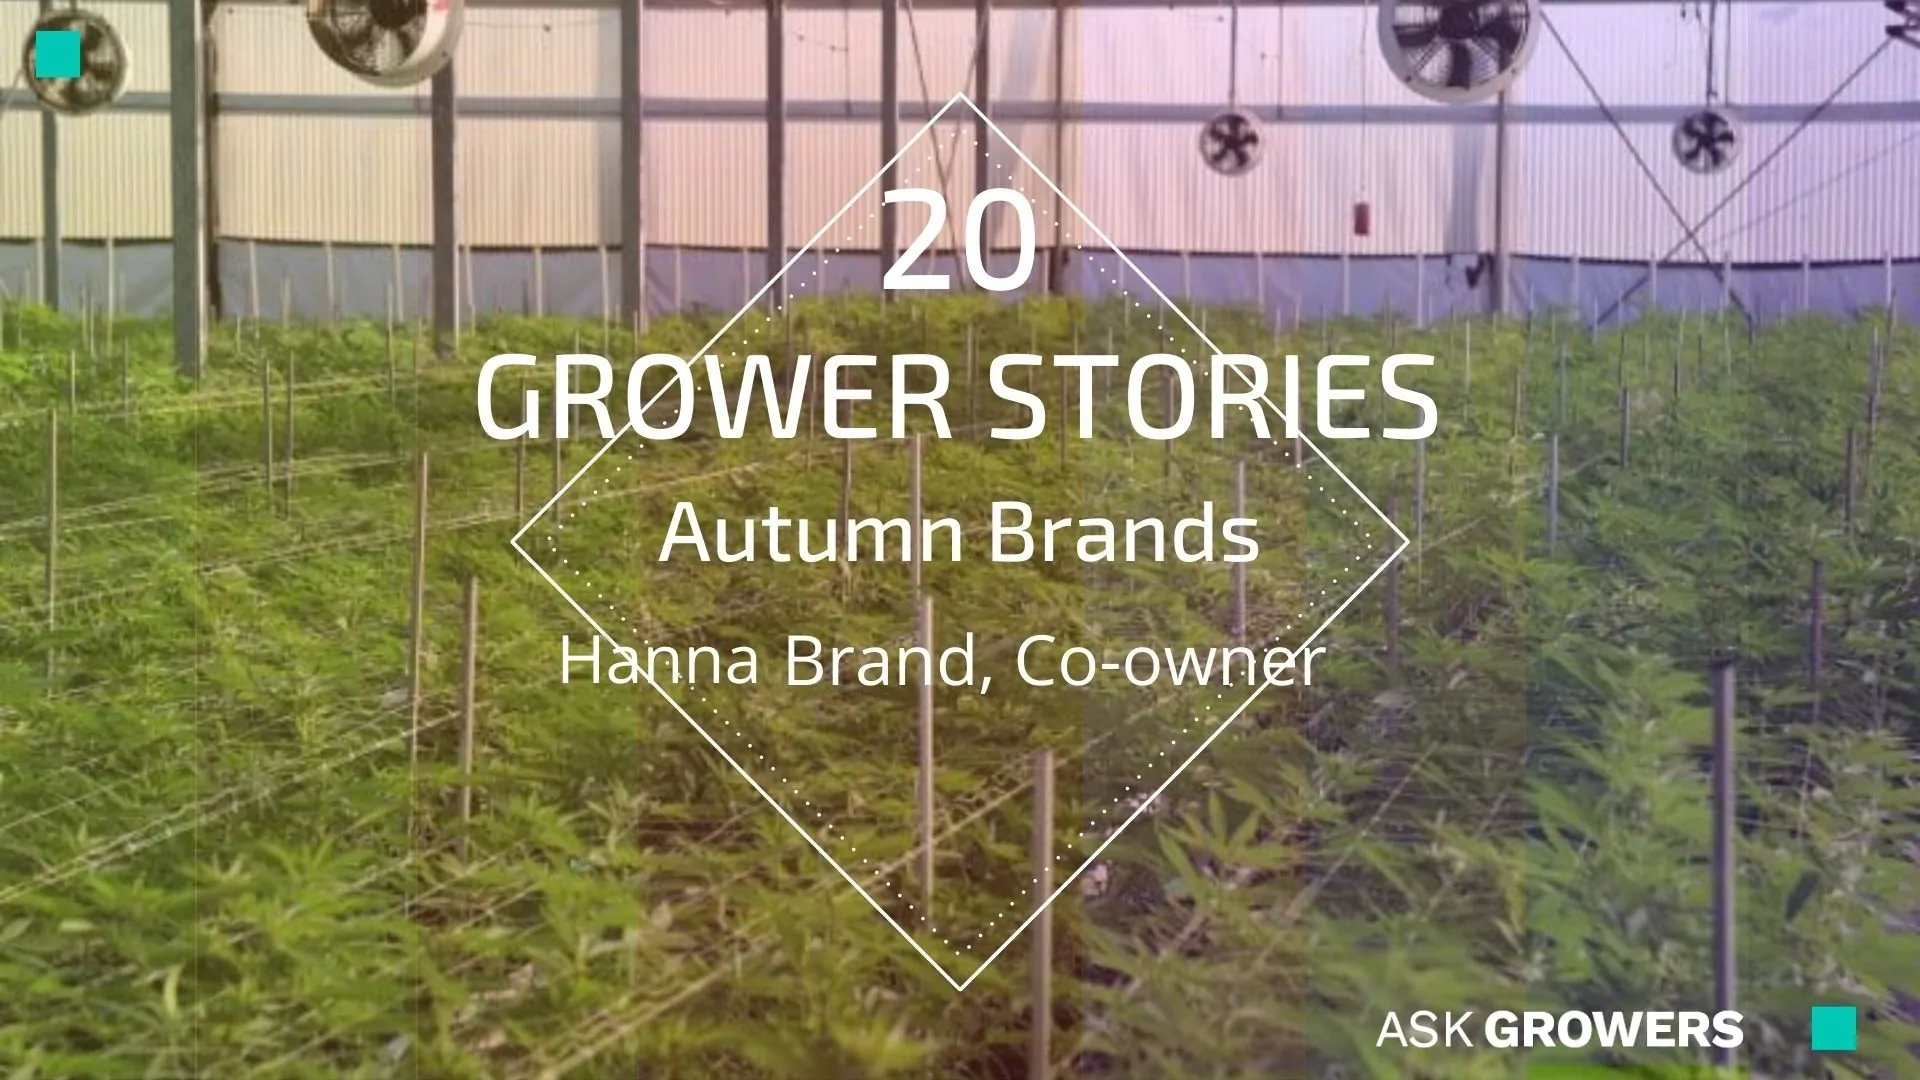 Grower Stories #20: Hanna Brand